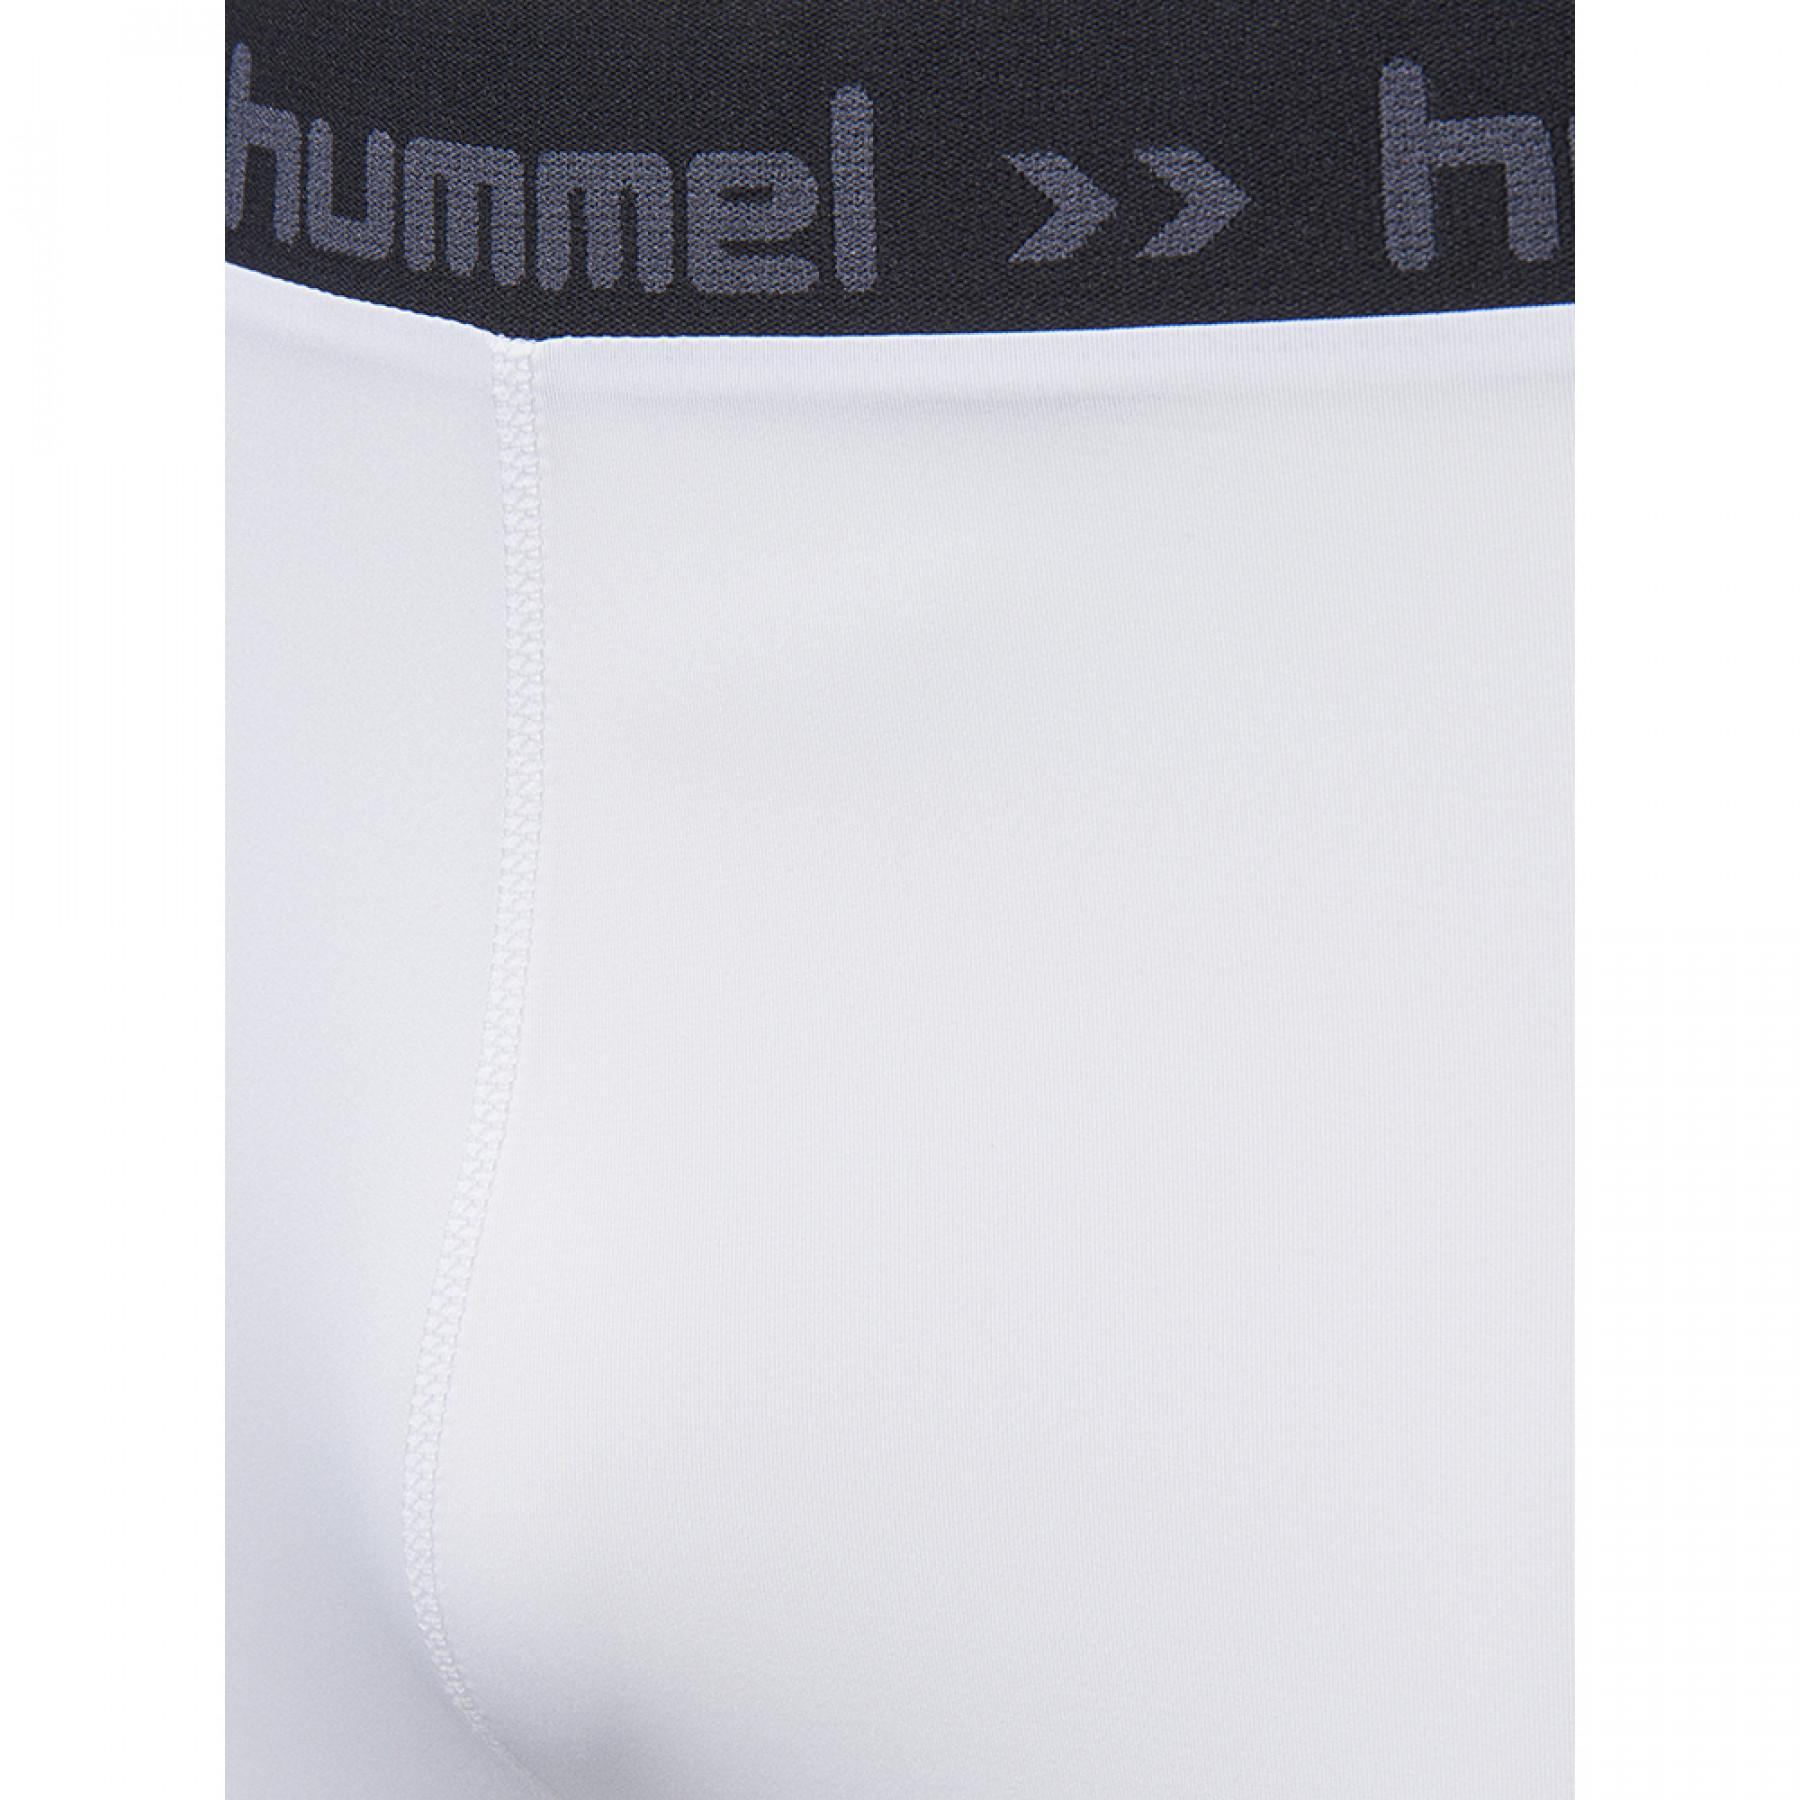 Pantalones cortos Hummel first perf short